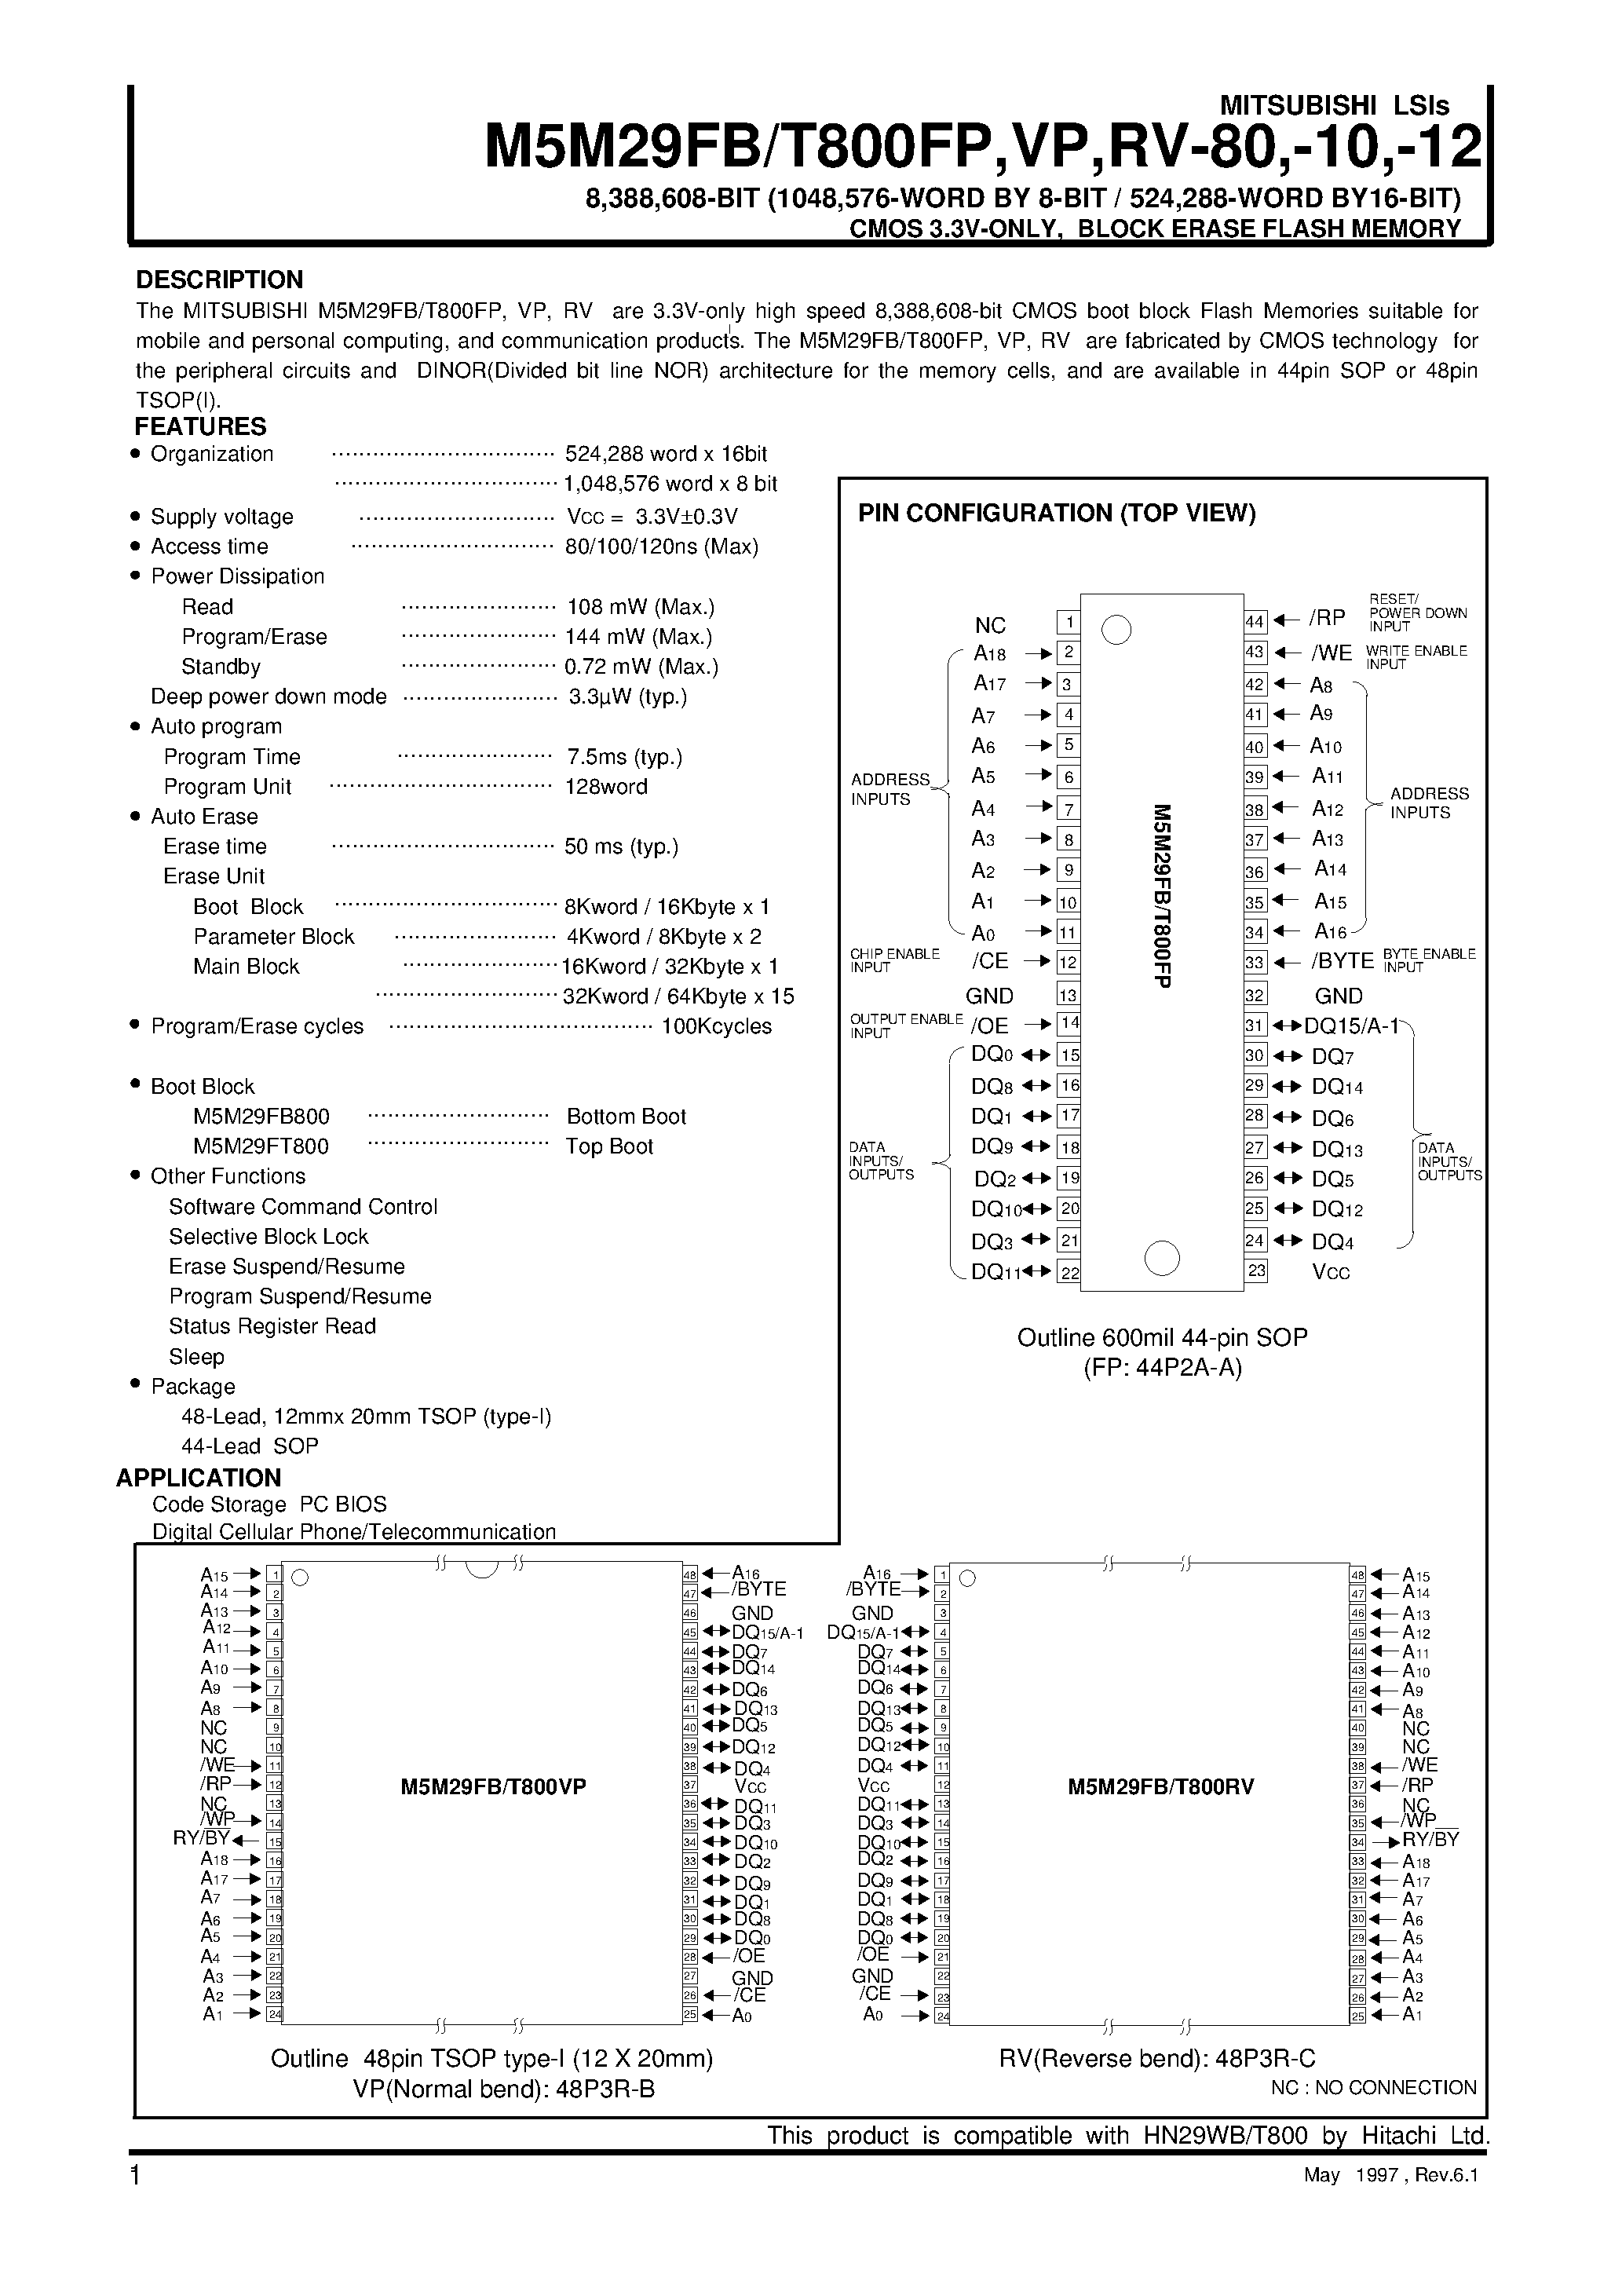 Datasheet M5M29FT800FP - 8 /388 /608-BIT (1048 /576-576-WORD BY 8-BIT / 524 /288-WORD BY16-BIT)CMOS 3.3V-ONLY / BLOCK ERASE FLASH MEMORY page 1